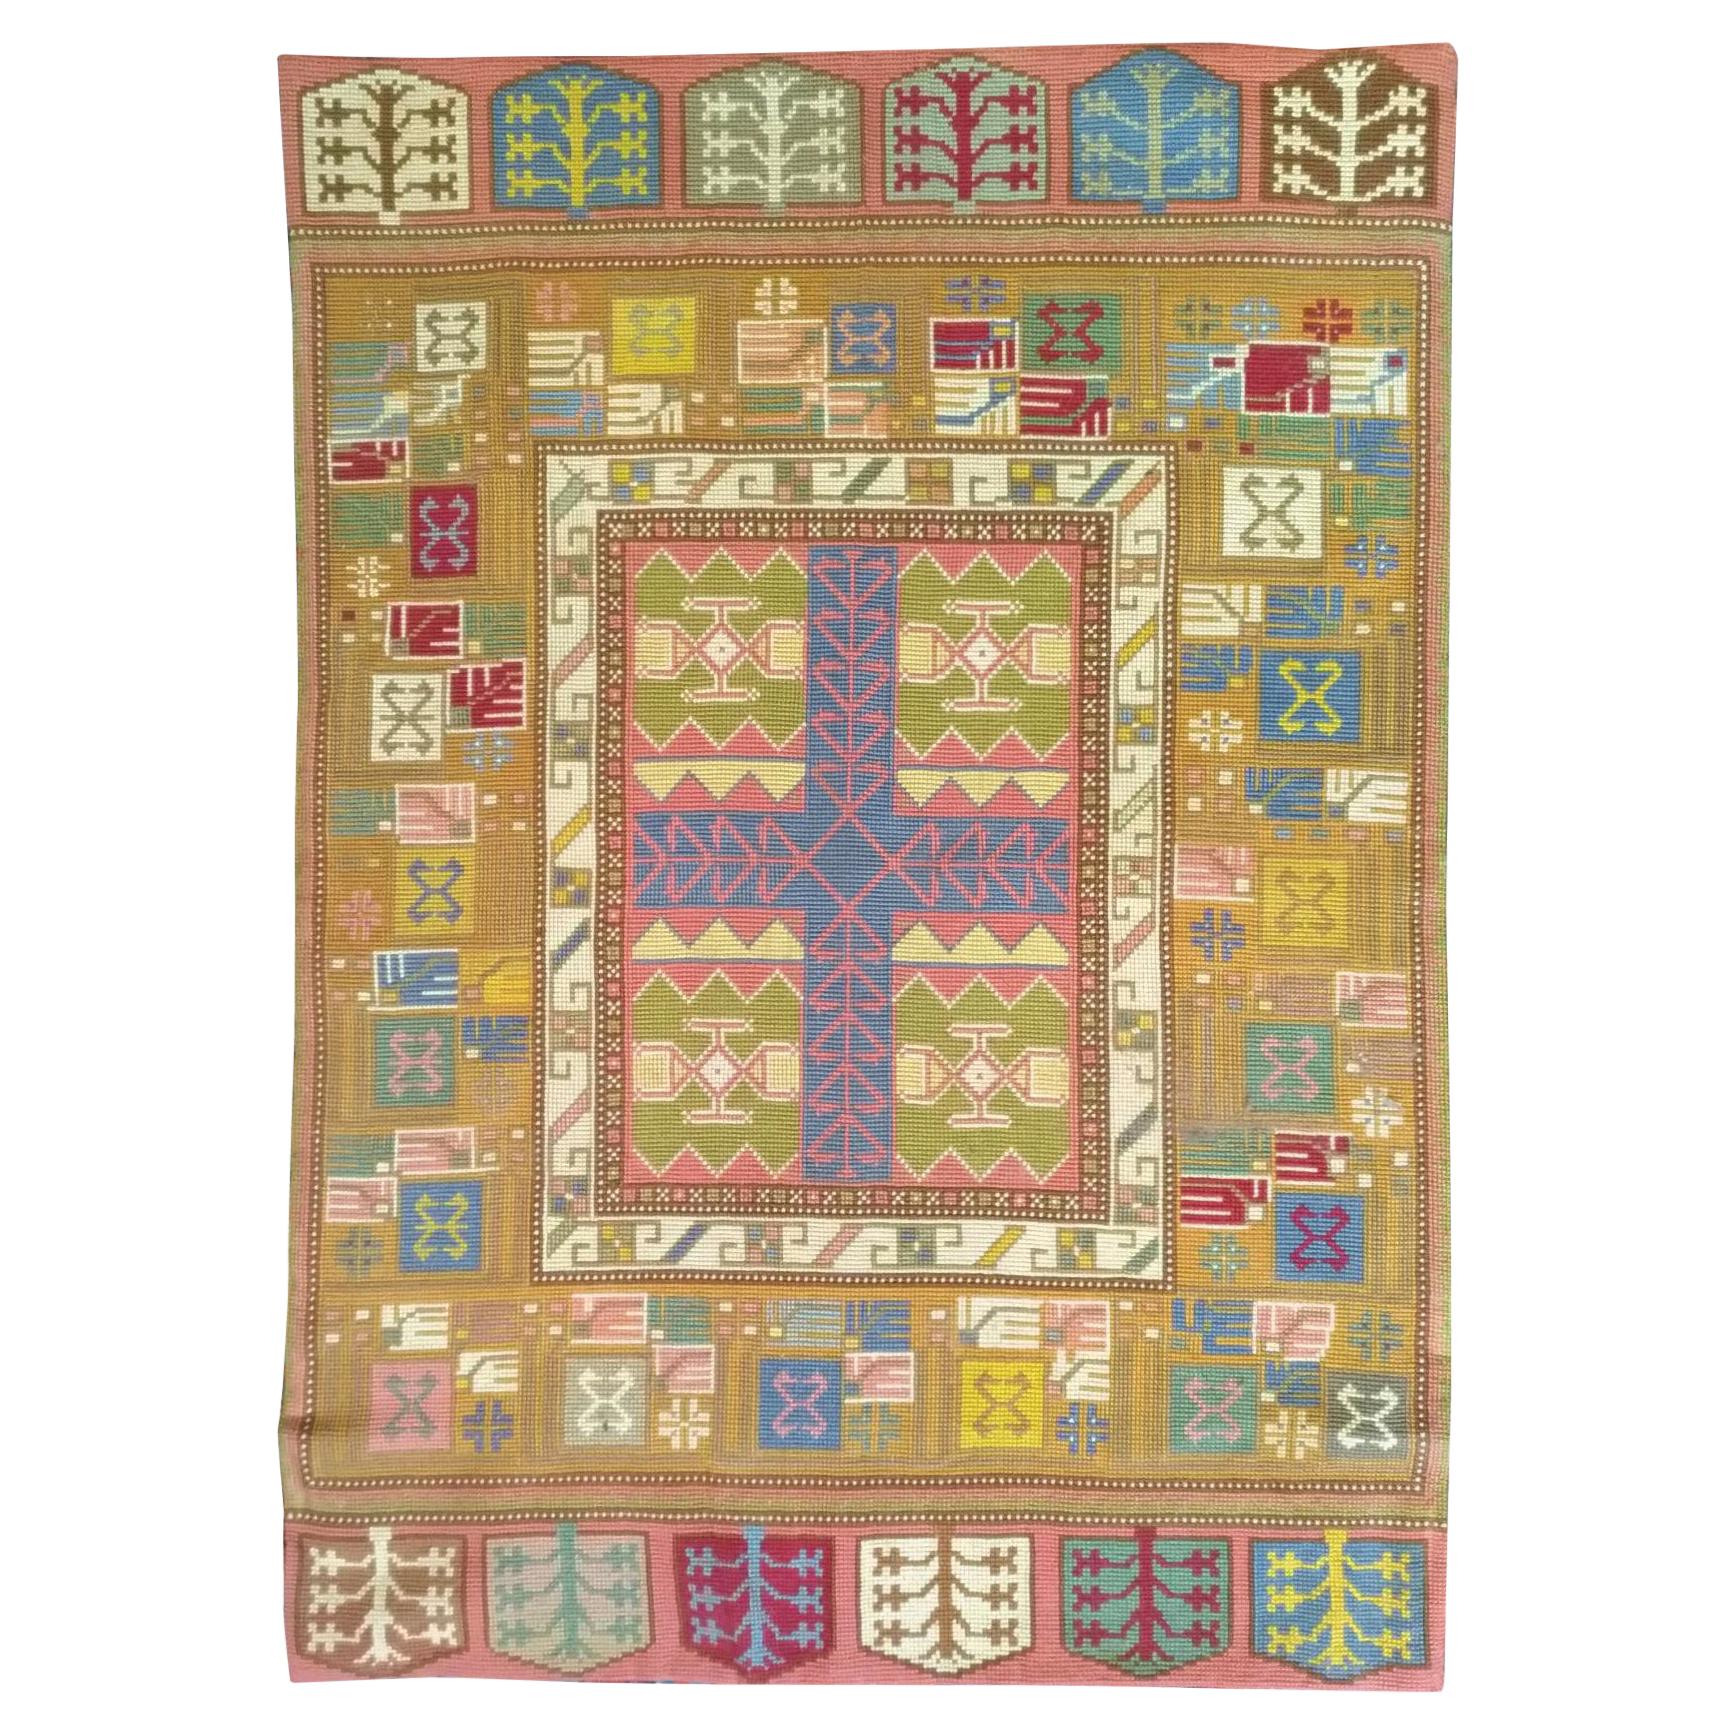 1044 - 20th Century Needle Carpet, France